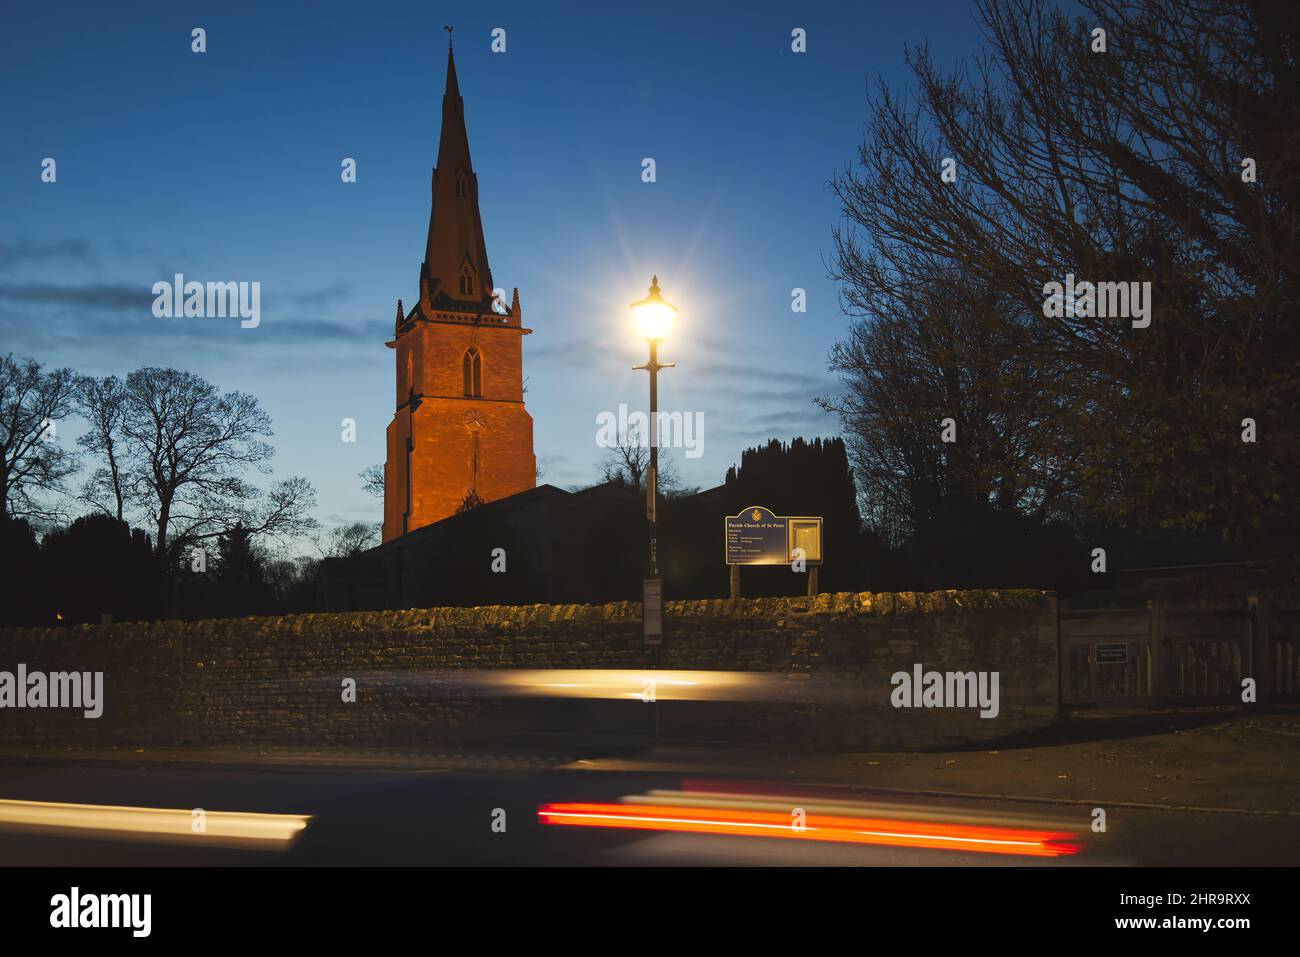 St Peter's Church, Sharnbrook, Bedfordshire, UK - Light trails from car speeding past parish church lit up at night Stock Photo